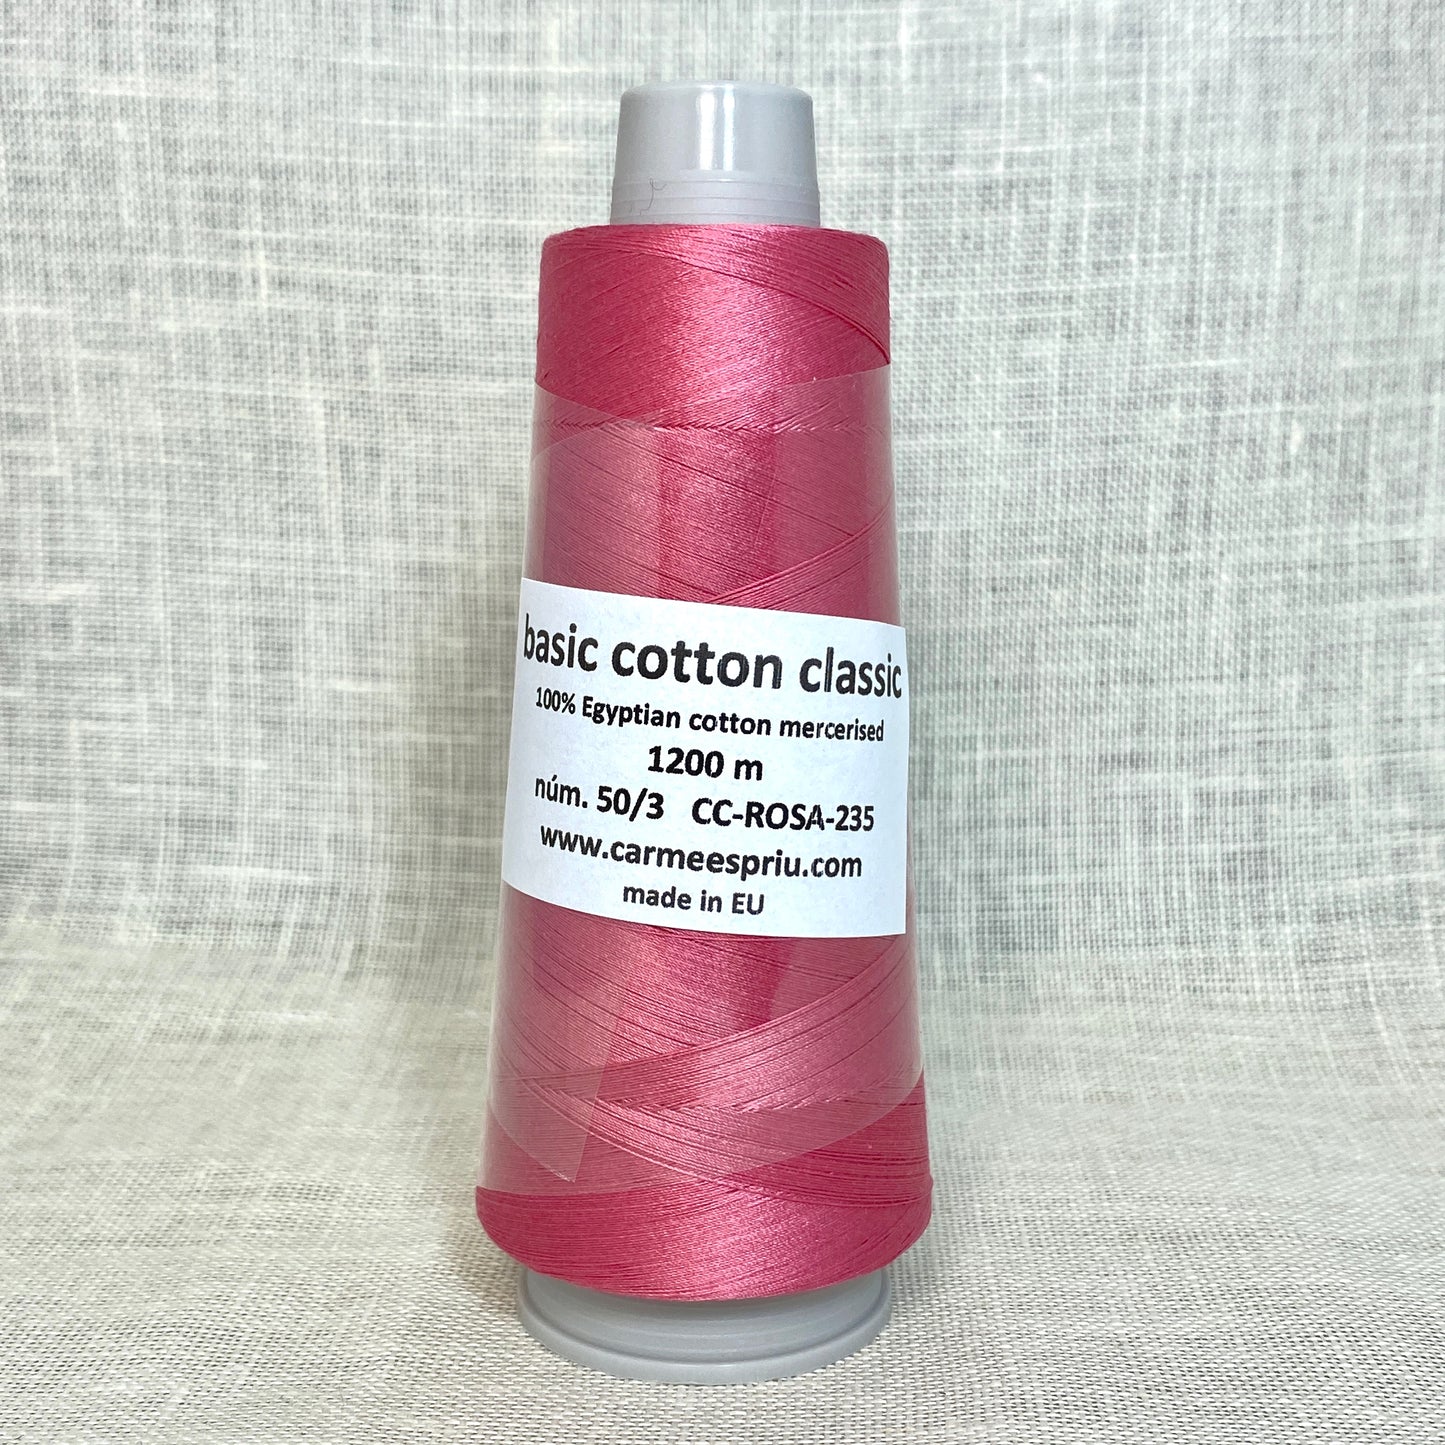 Basic cotton classic rosa nº 235